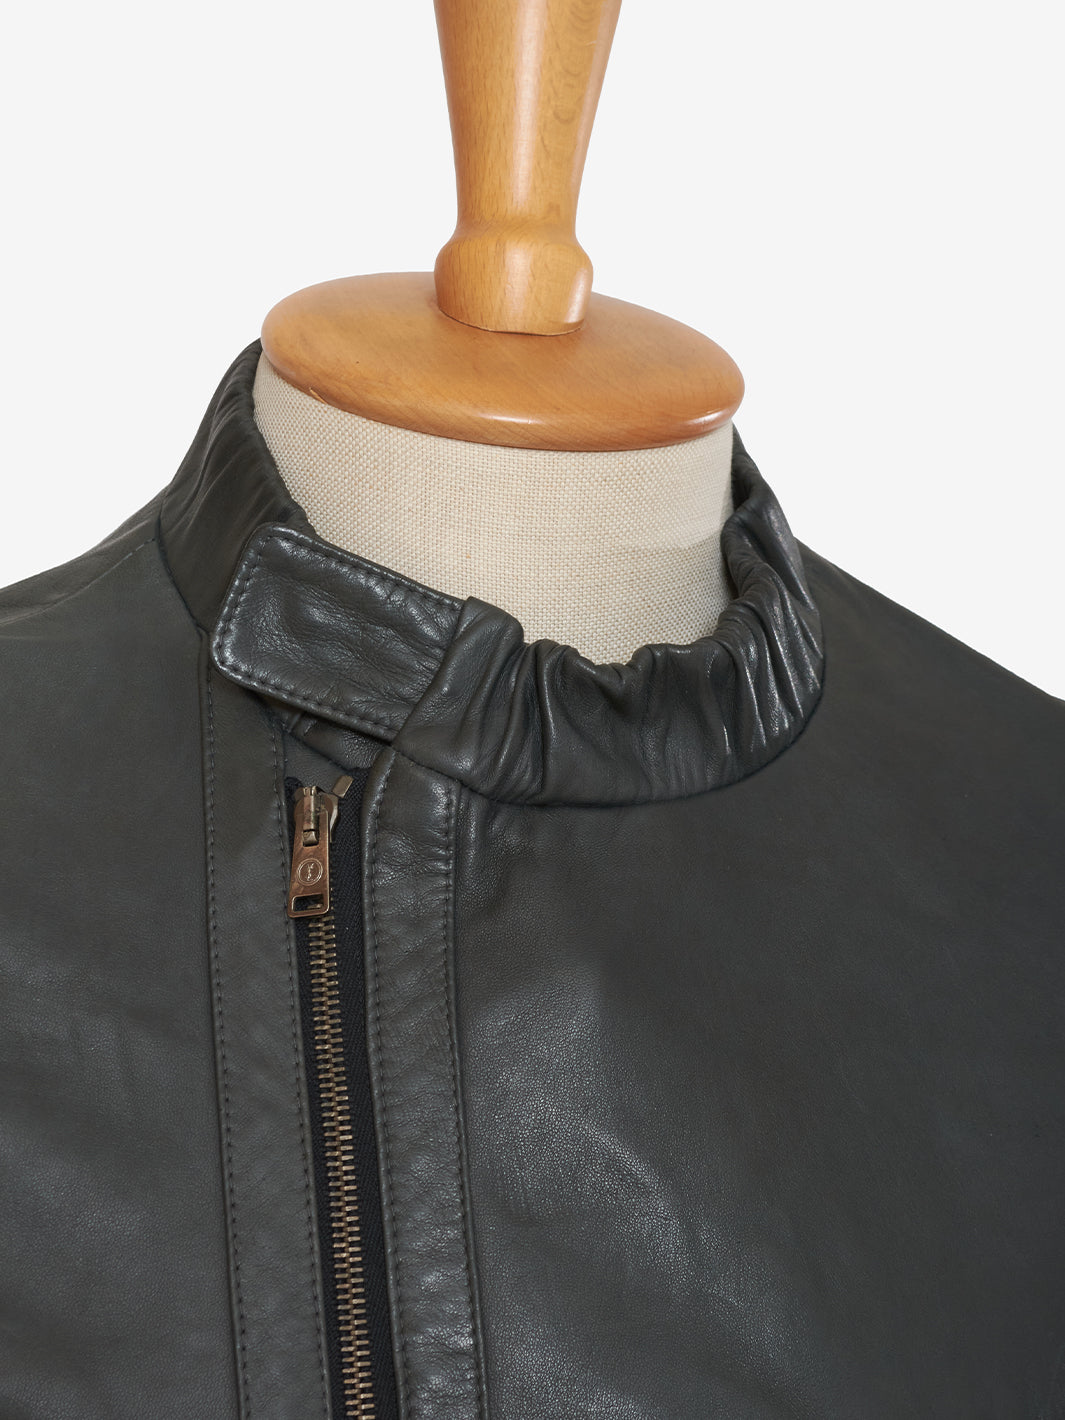 Yves Saint Laurent Green Leather Nail-like Jacket